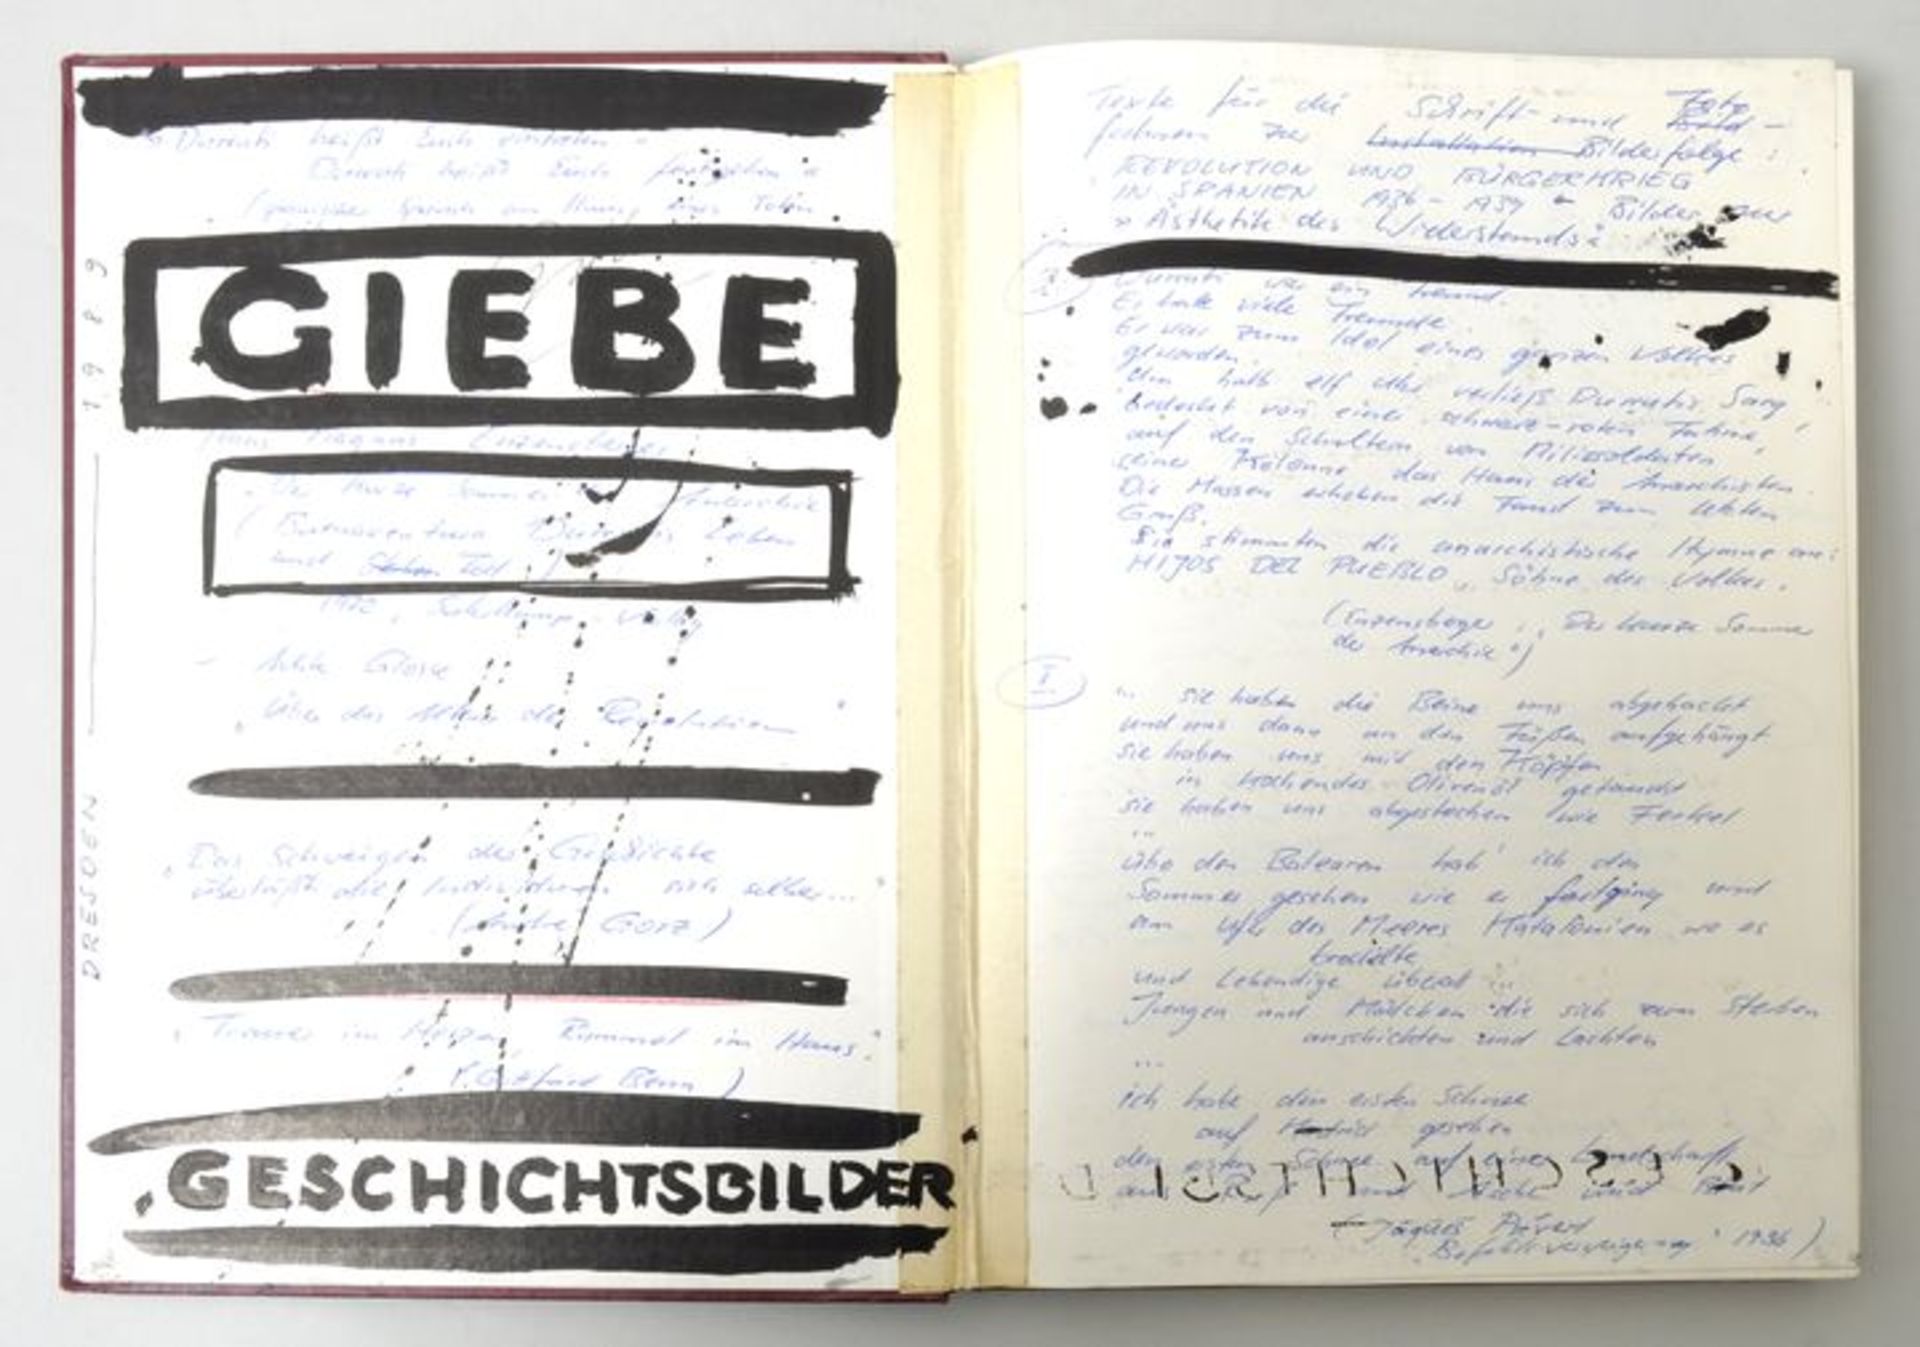 Giebe, Hubertus. 1953 Dohna bei DresdenSkizzenbuch 1989 / 1992. Innen bezeichnet "GIEBE", datiert